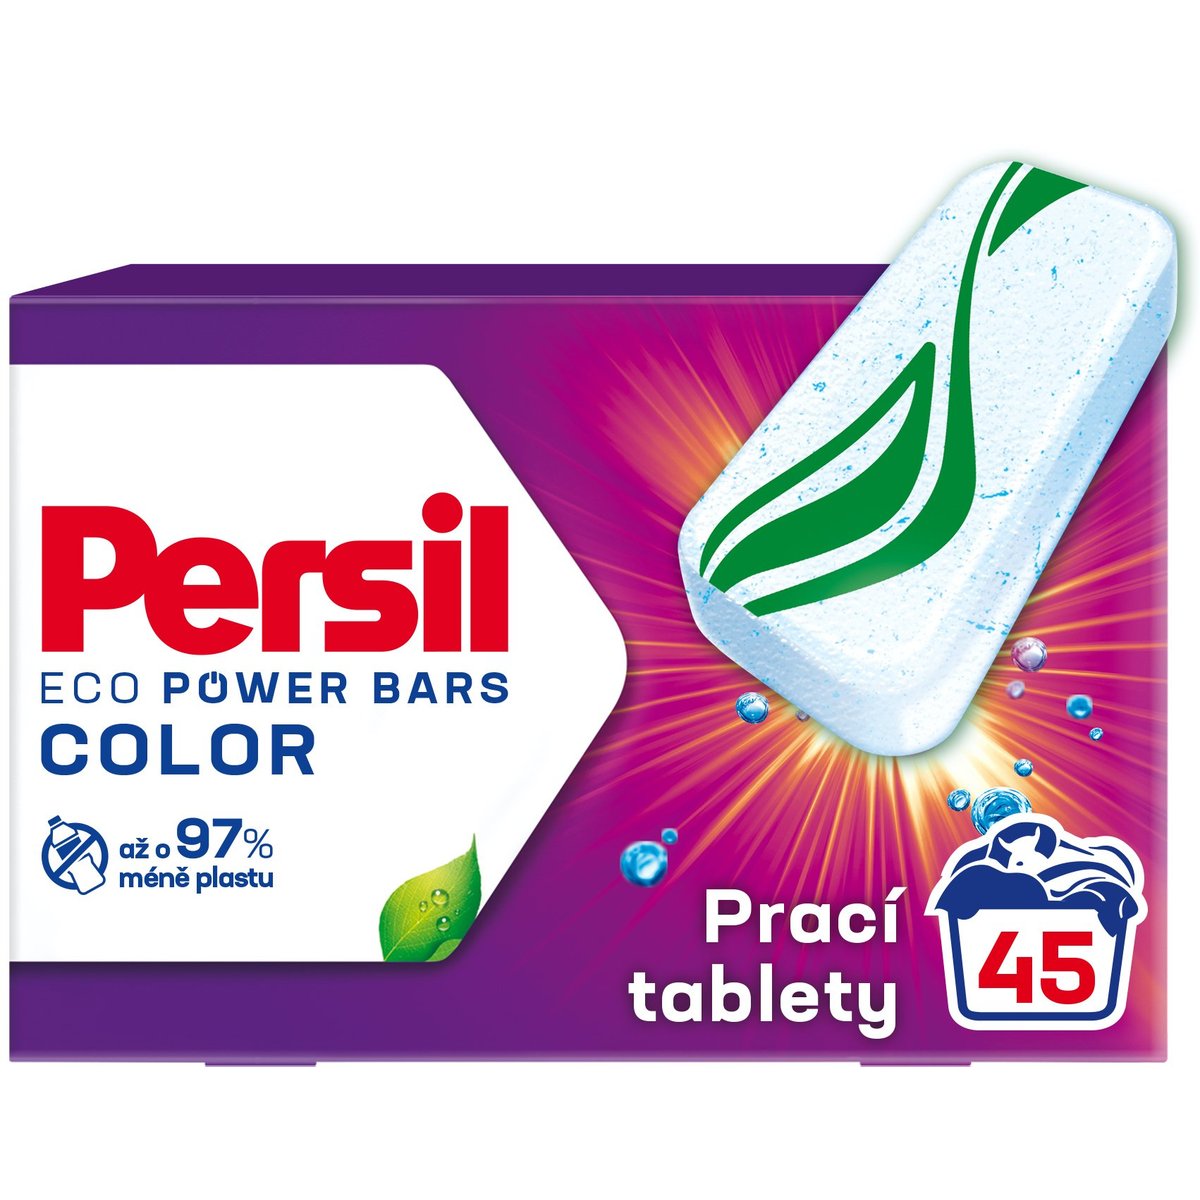 Persil Eco Power Bars Color prací tablety